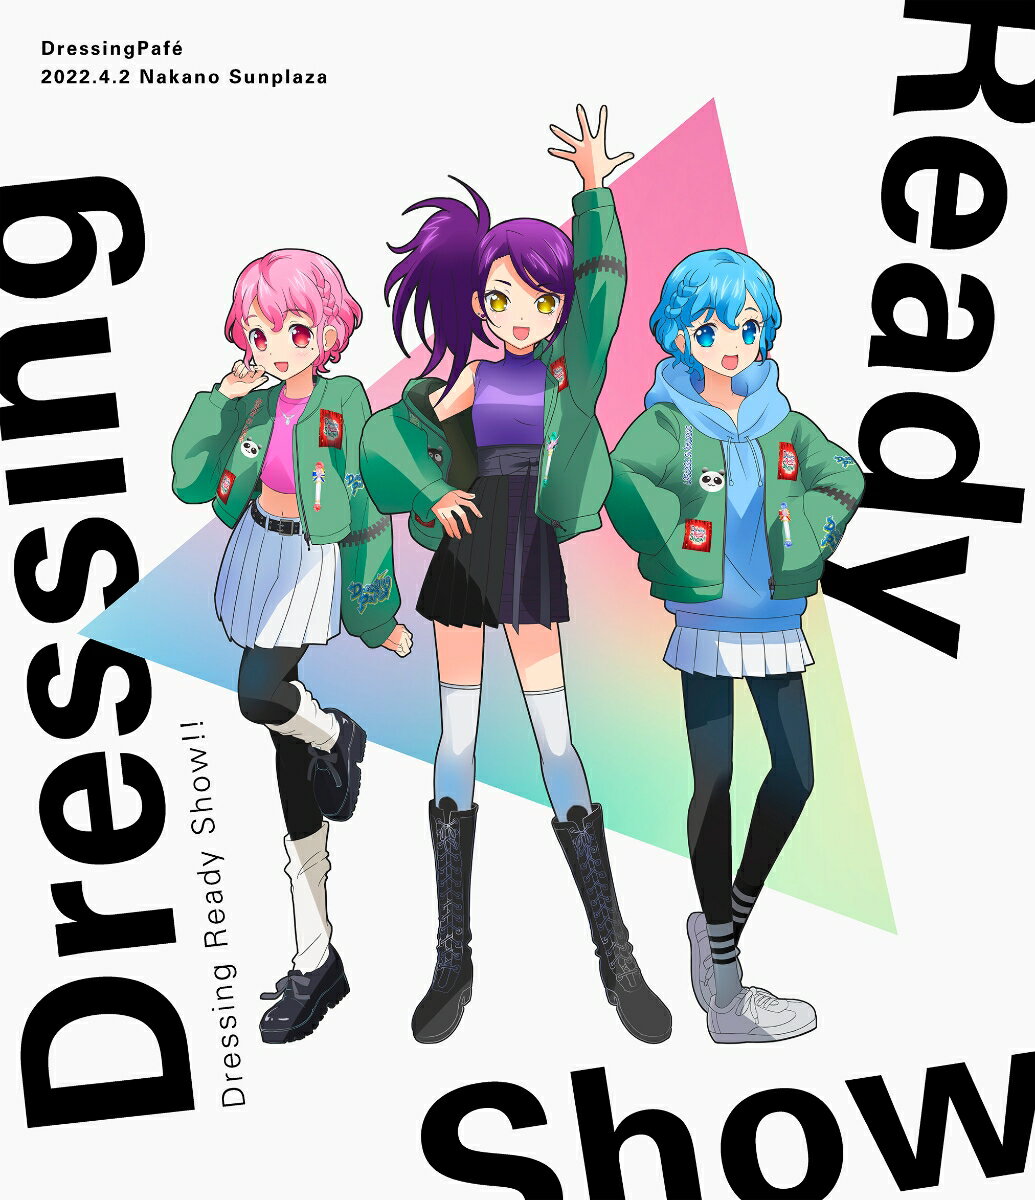 Dressing Ready Show 【Blu-ray】 DressingPafe(cv.山北早紀 澁谷梓希 若井友希)